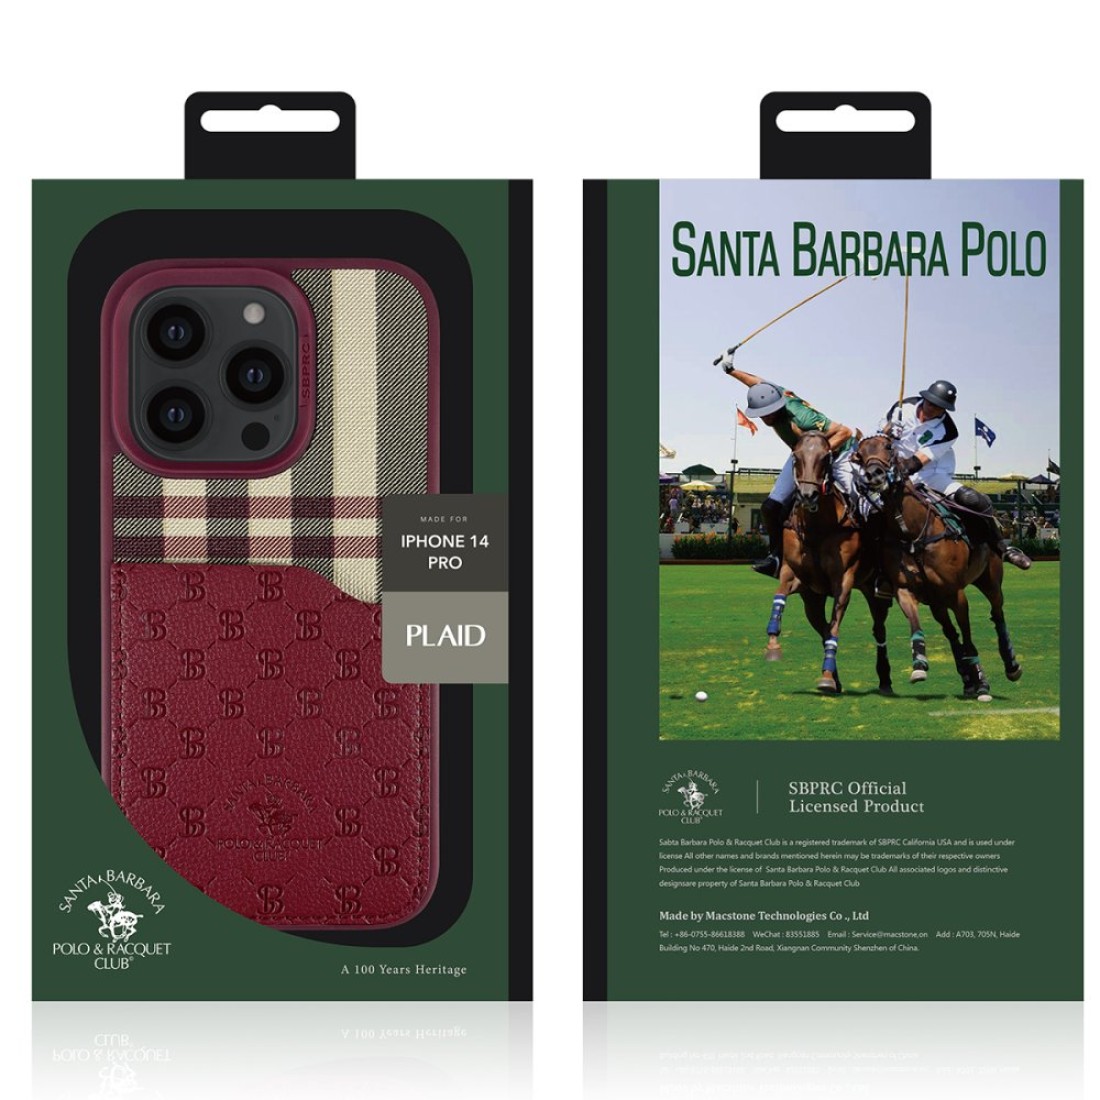 Santa Barbara Polo Racquet Club Apple iPhone 14 Pro Plaid Kartvizitli Kapak - Mor